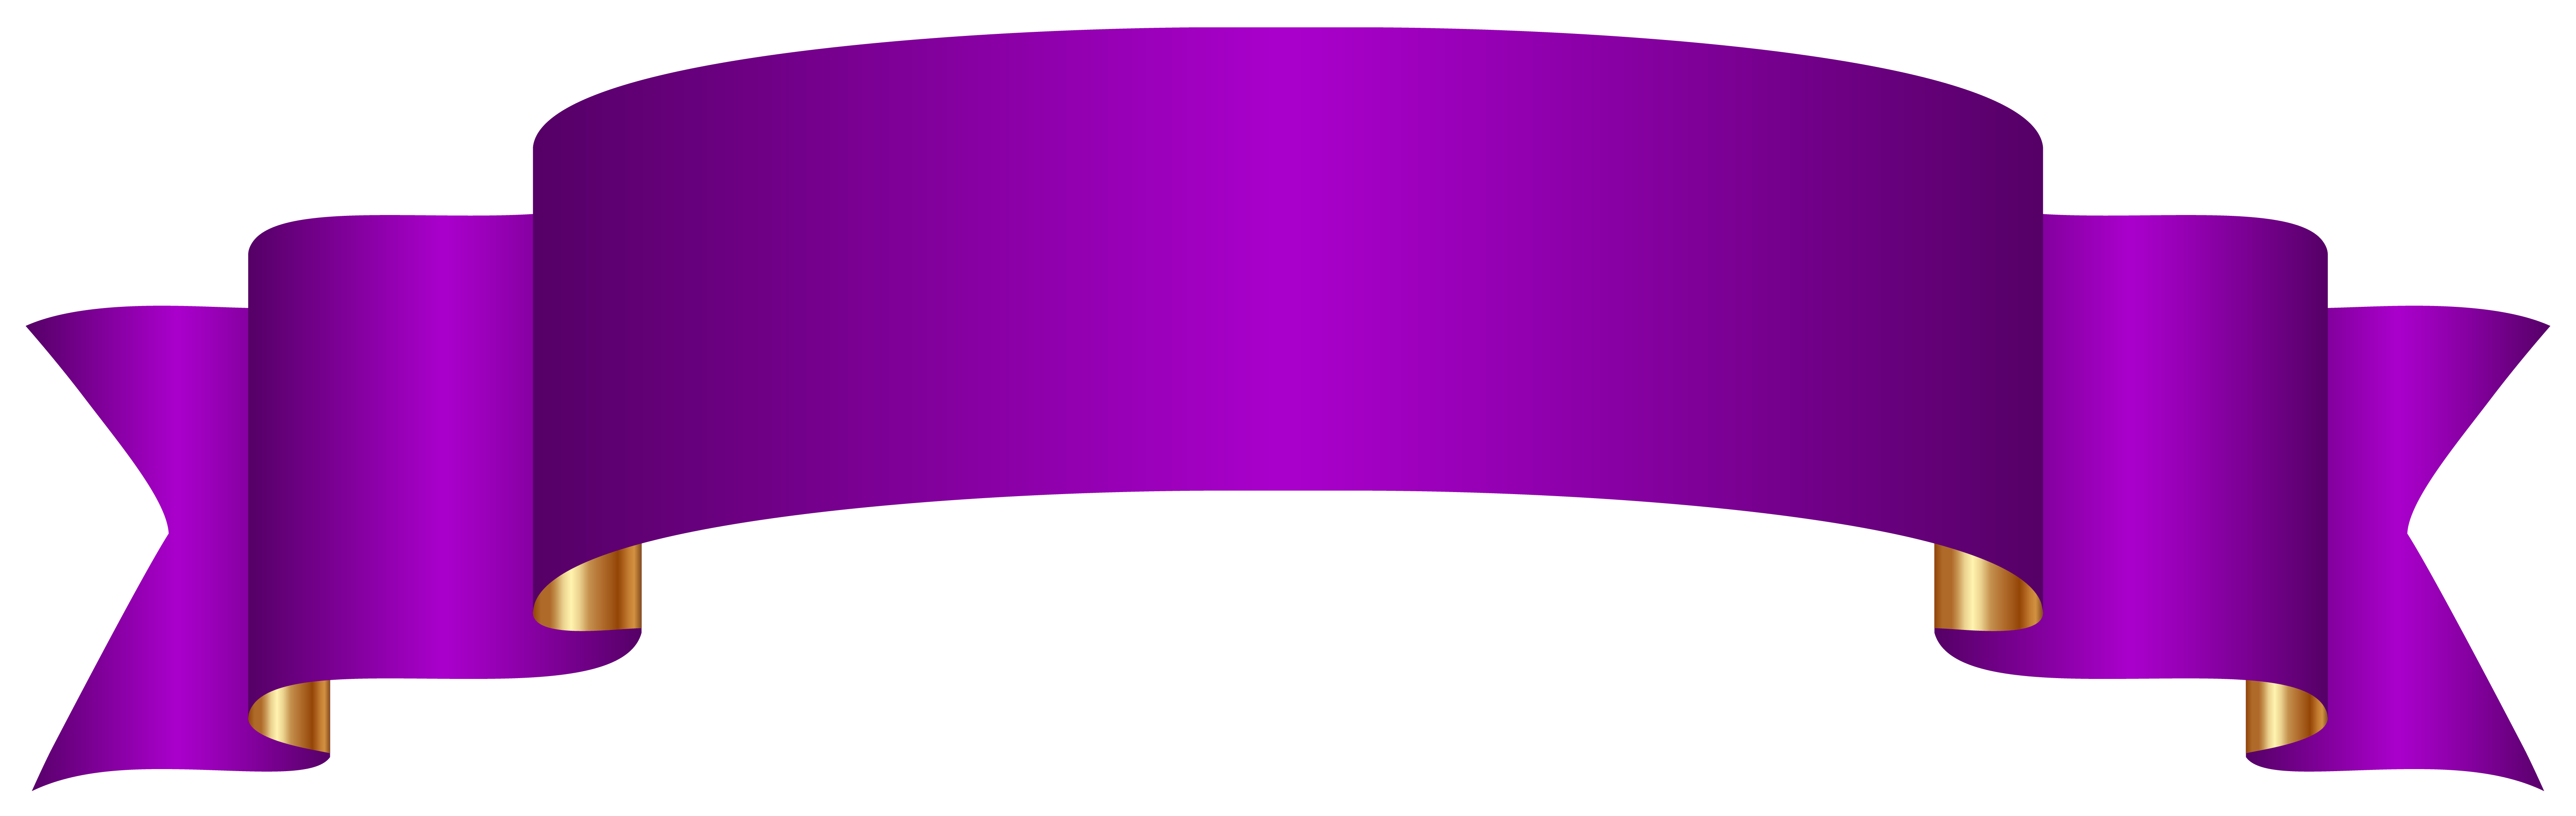 Pennant clipart ribbon. Banner purple ideal vistalist